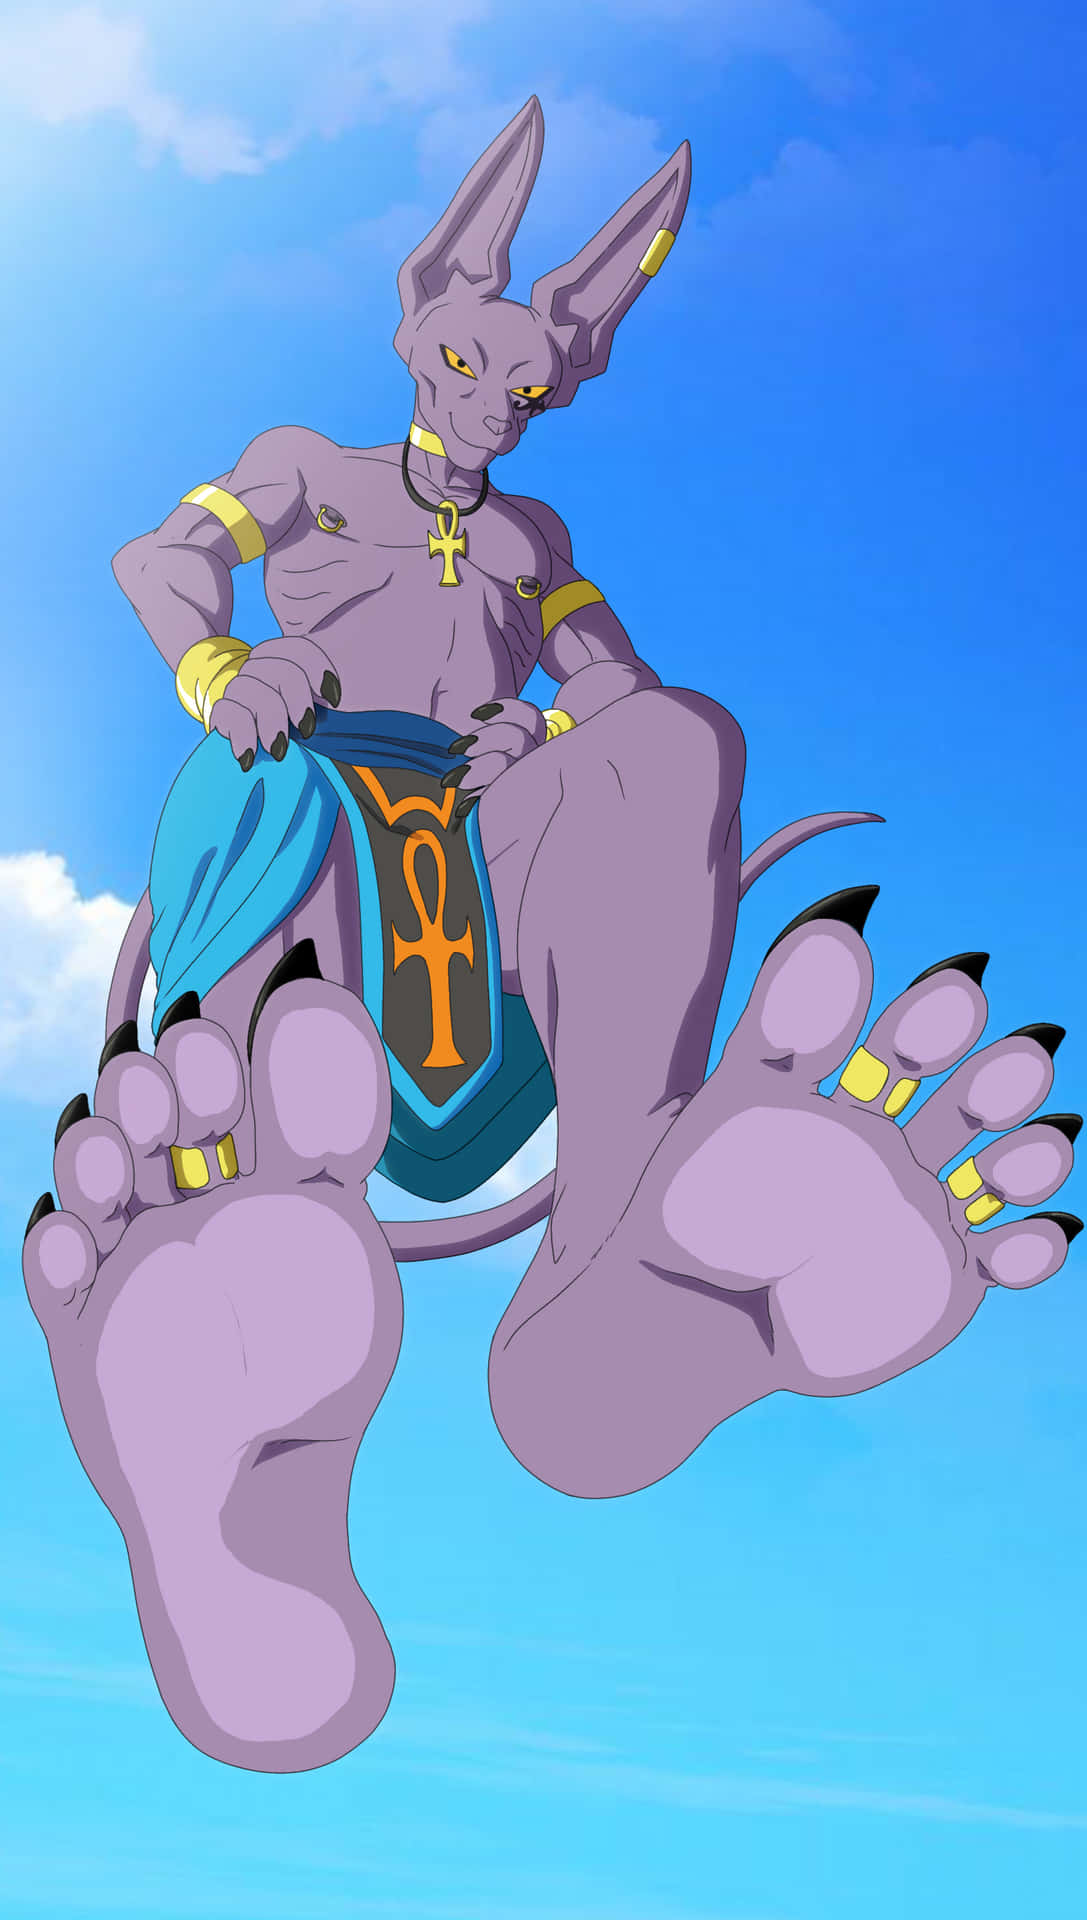 Beerus, Dragon Ball Z character, showing toes Wallpaper